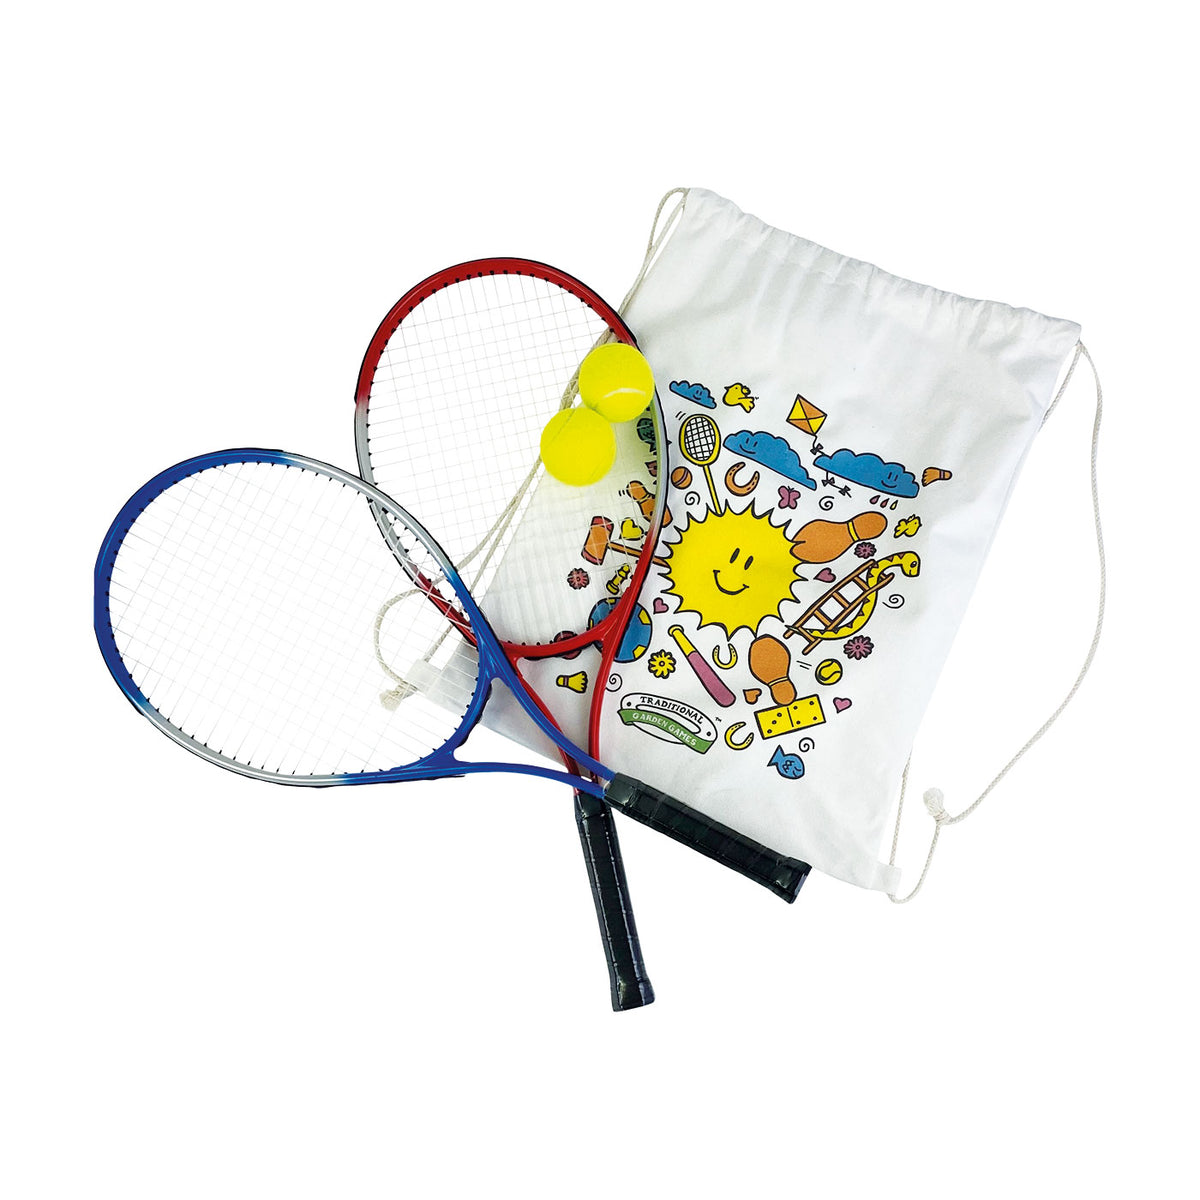 2 Player Tennis Set